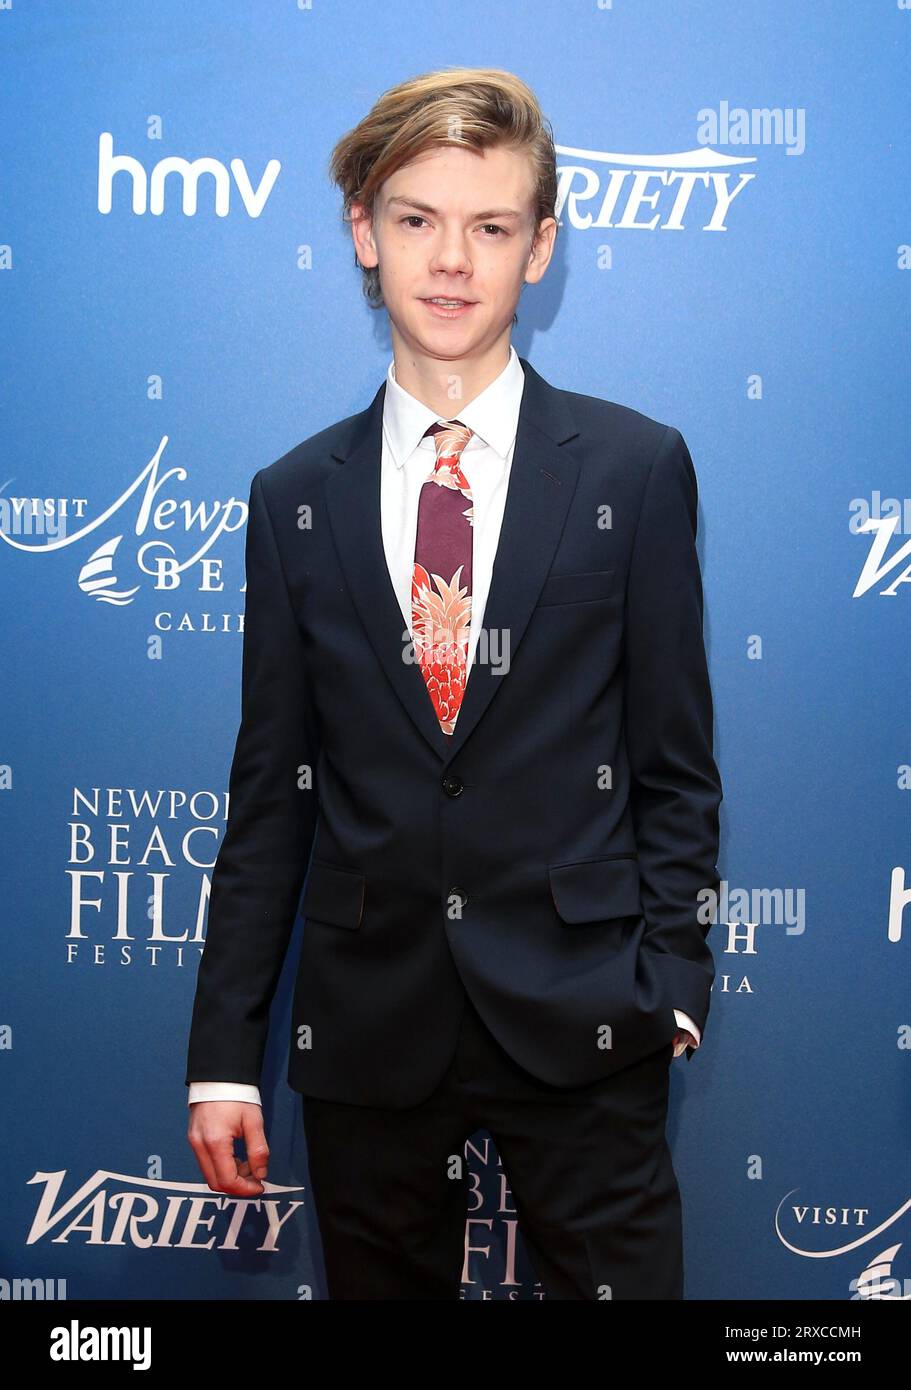 Thomas Brodie-Sangster partecipa al 'Newport Beach Film Festival' al Rosewood Hotel di Londra. Foto Stock